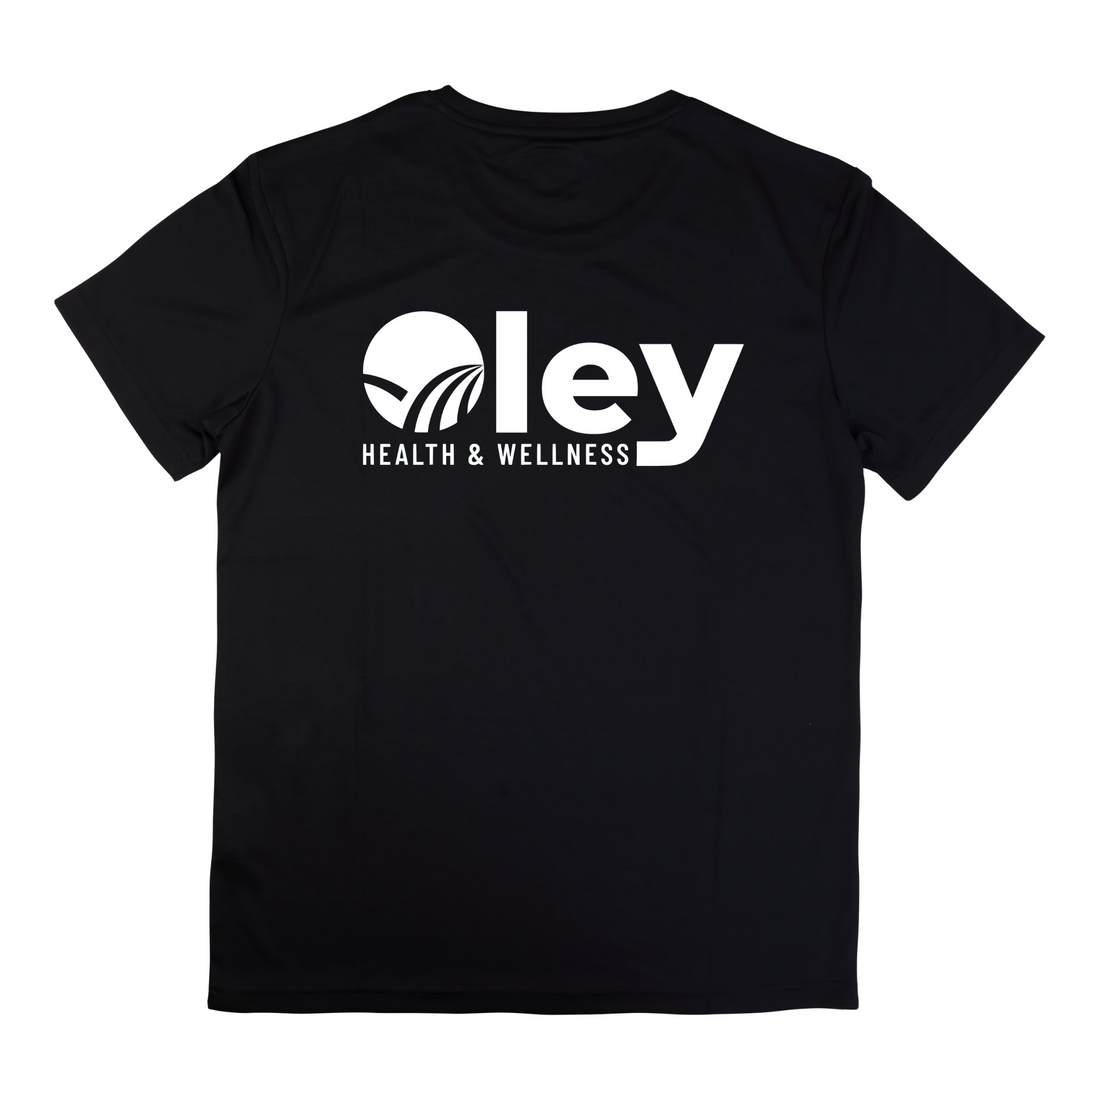 Oley Health and Wellness T-Shirt